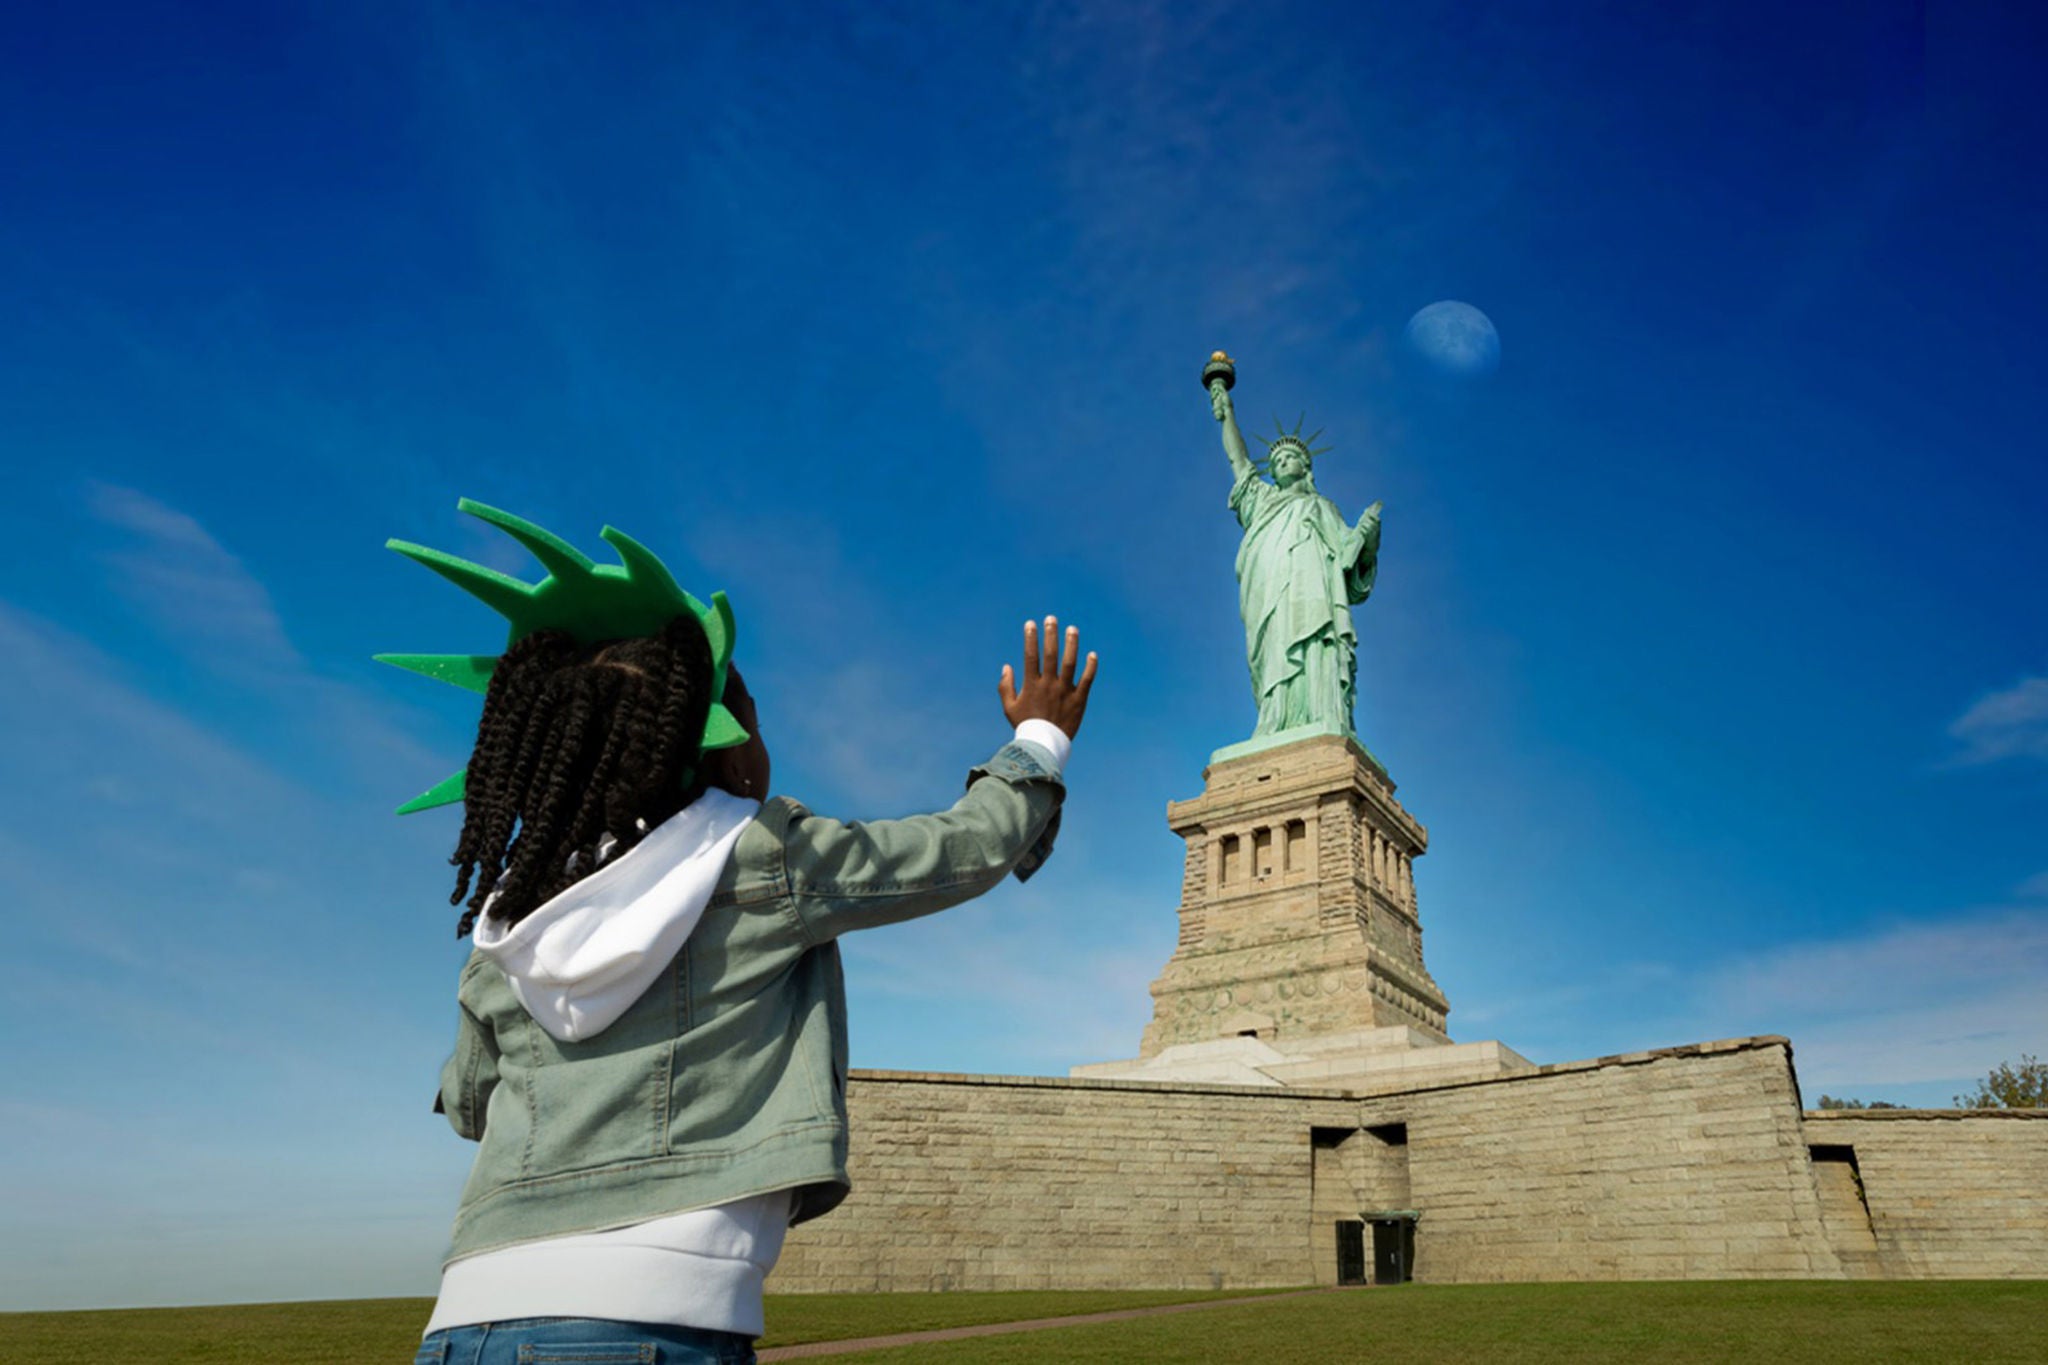 Girl waving at the statue of liberty